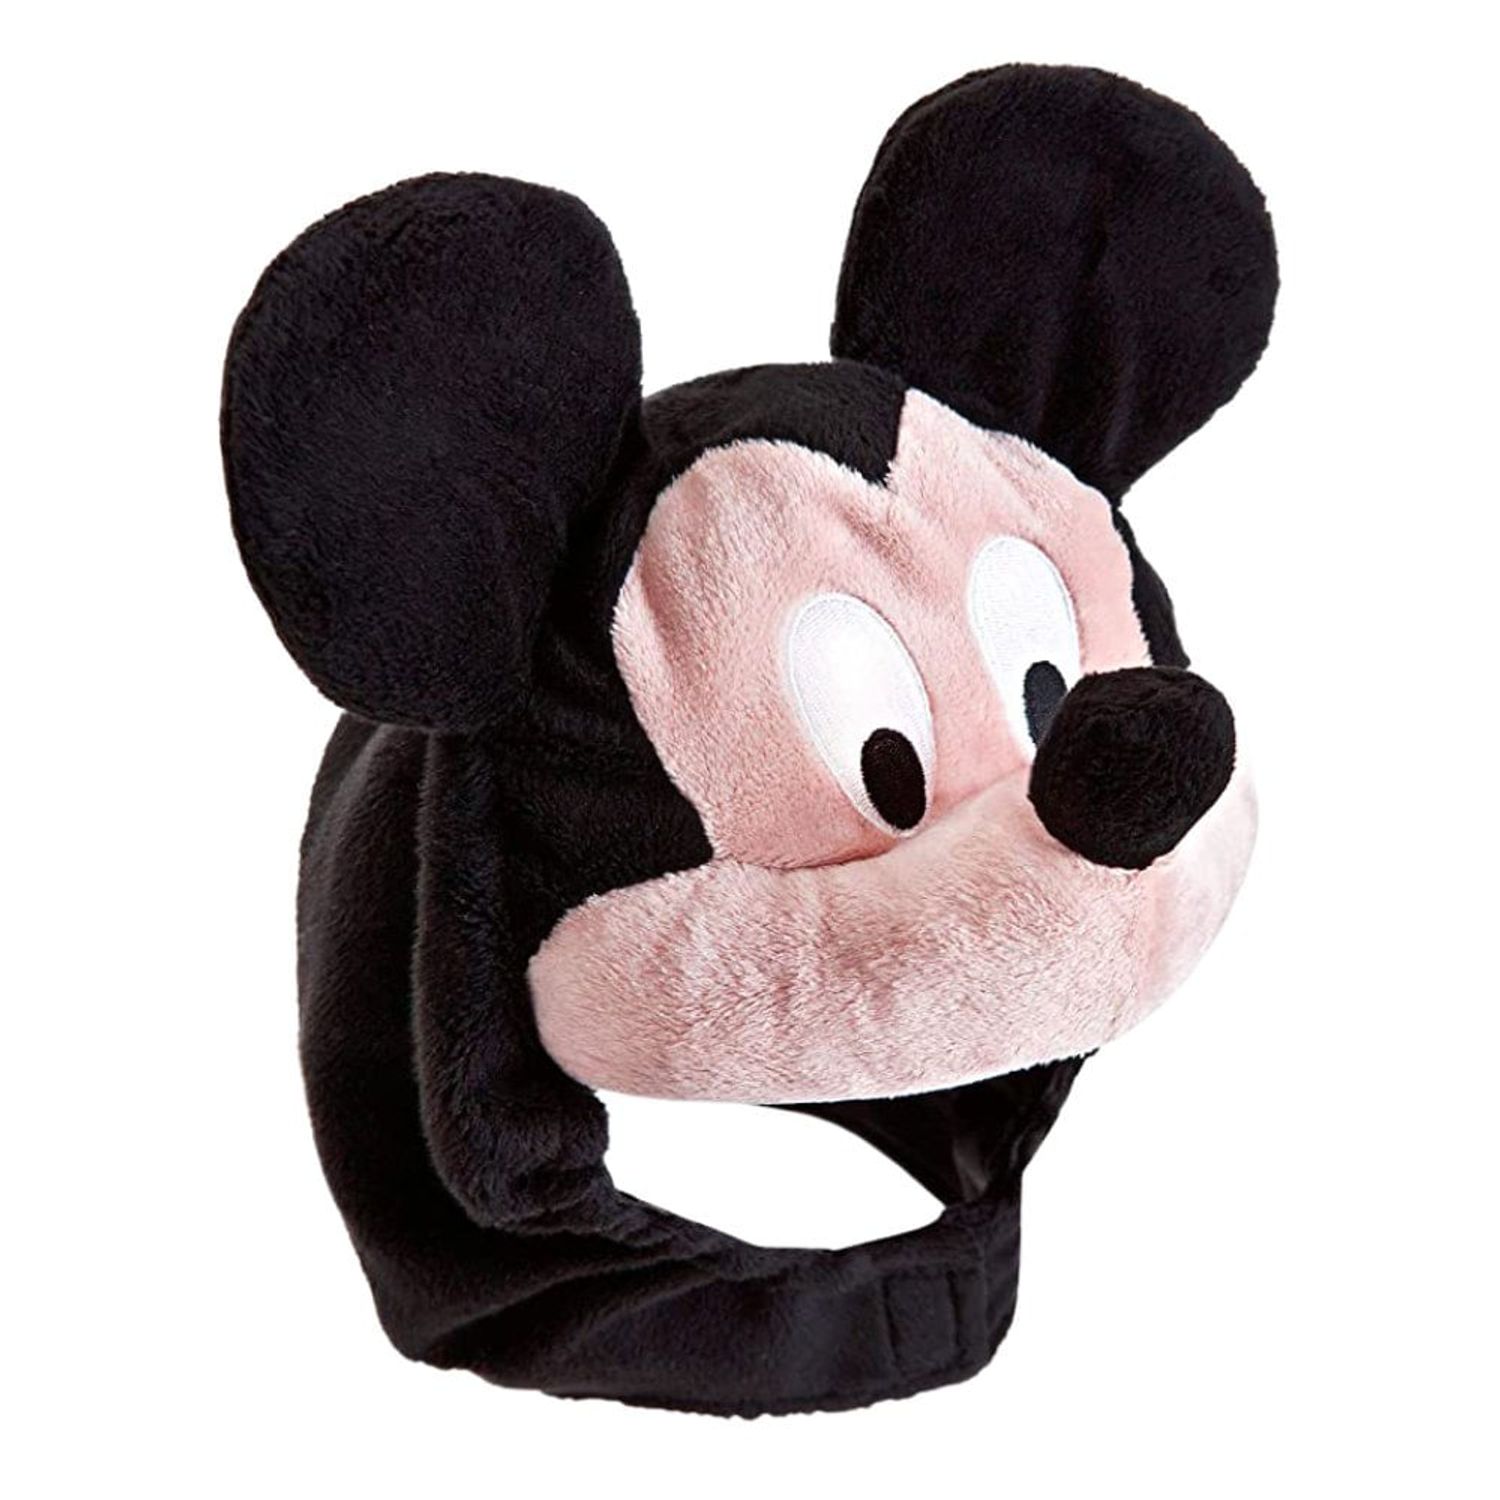 Disfraz de mickey mouse para niños, disfraz de Mascota de Disney